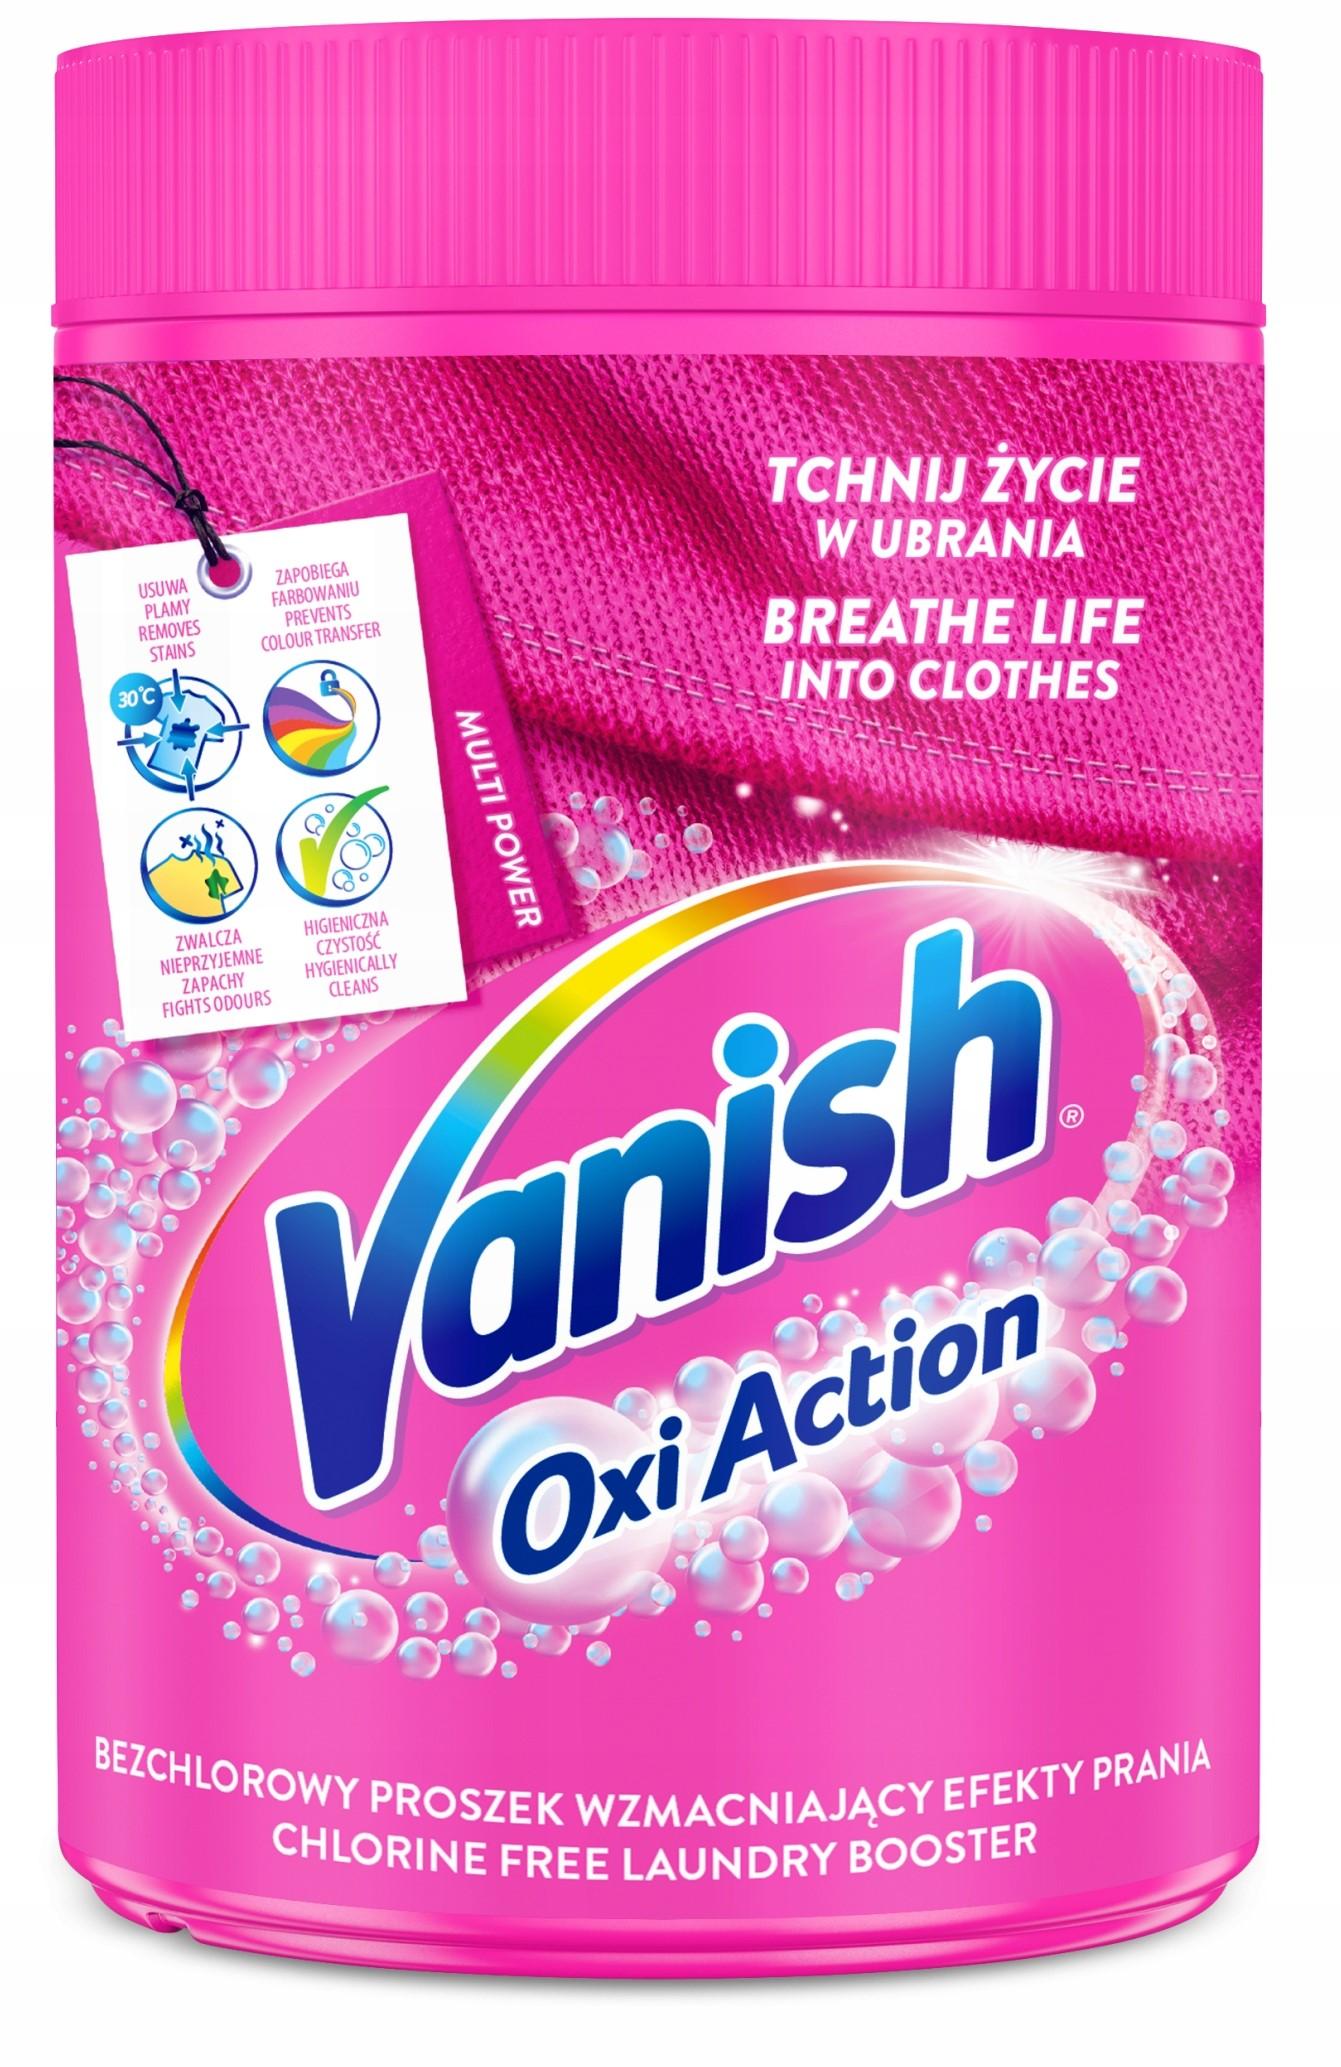 Vanish Oxi Action Gold Pink Prašak za odstranjivanje mrlja, 625g